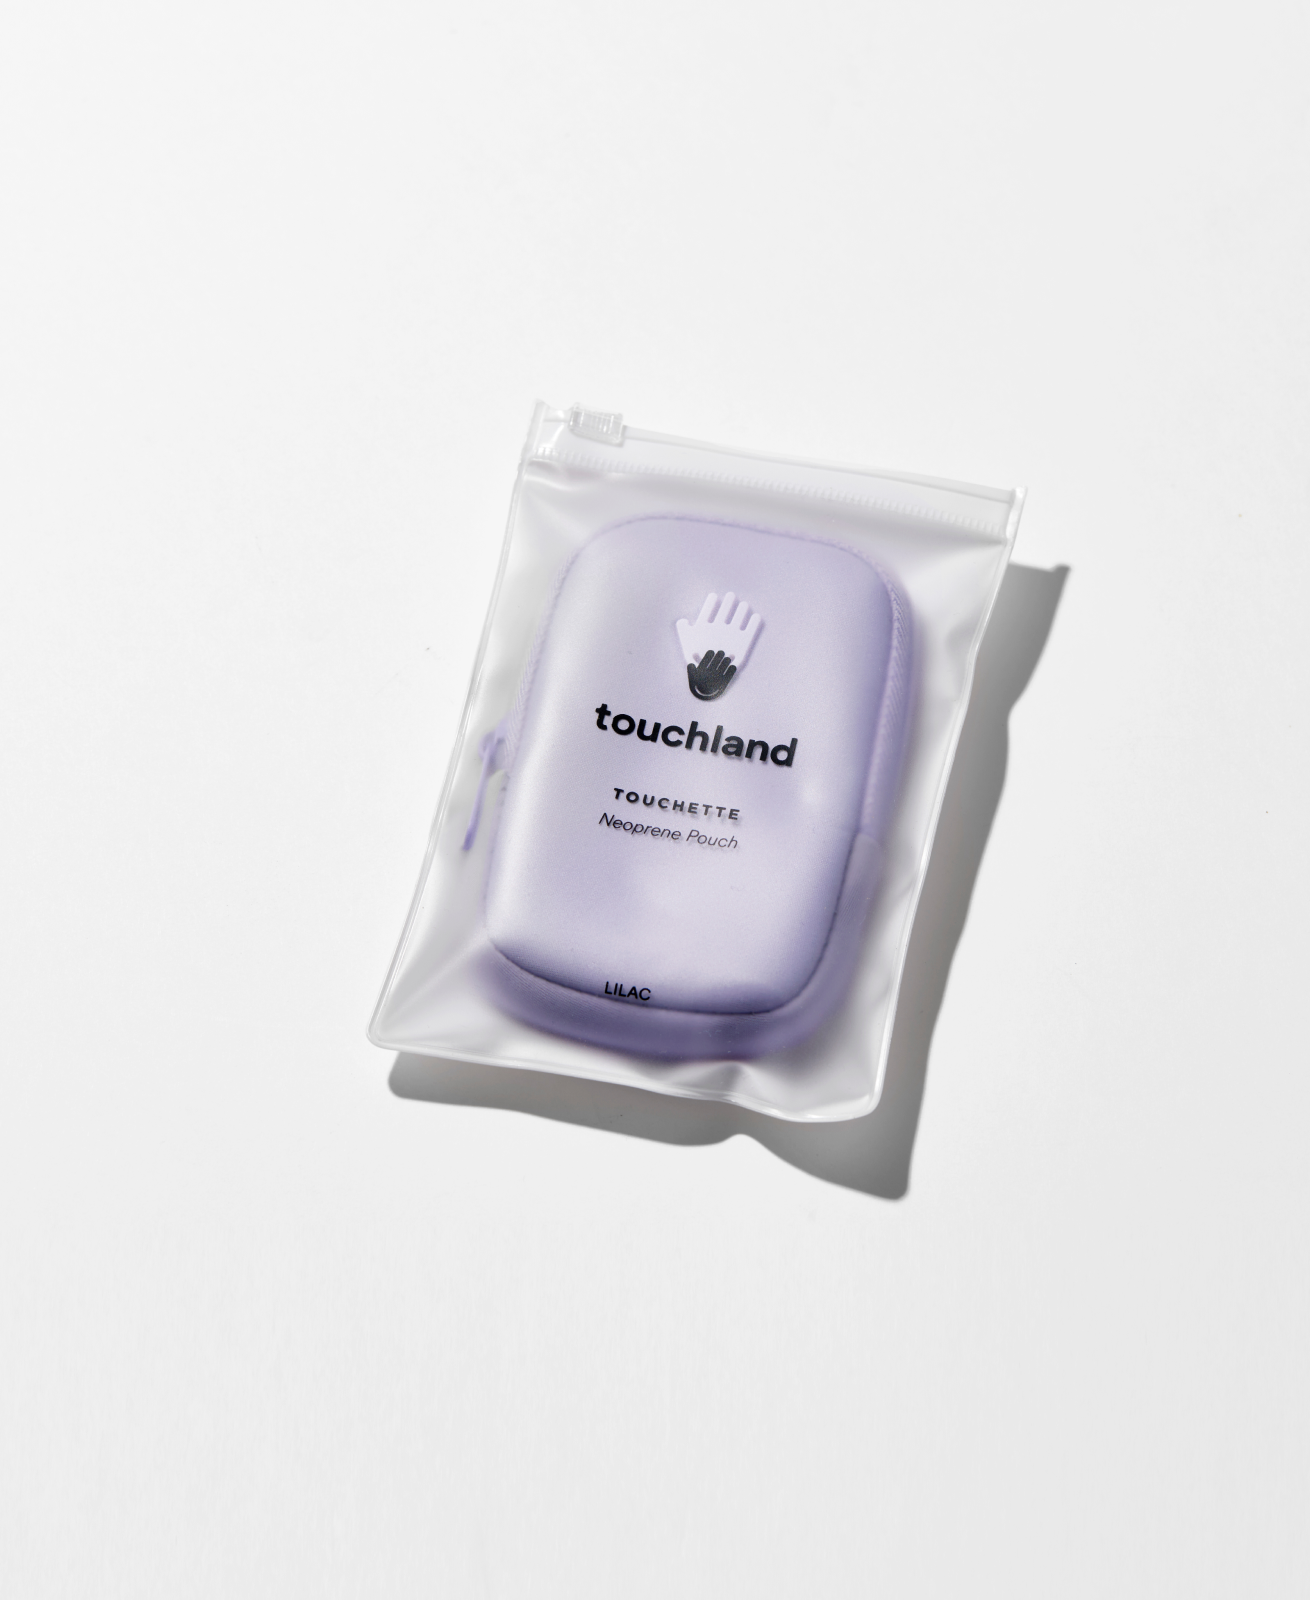 Light purple Touchette in packaging. background